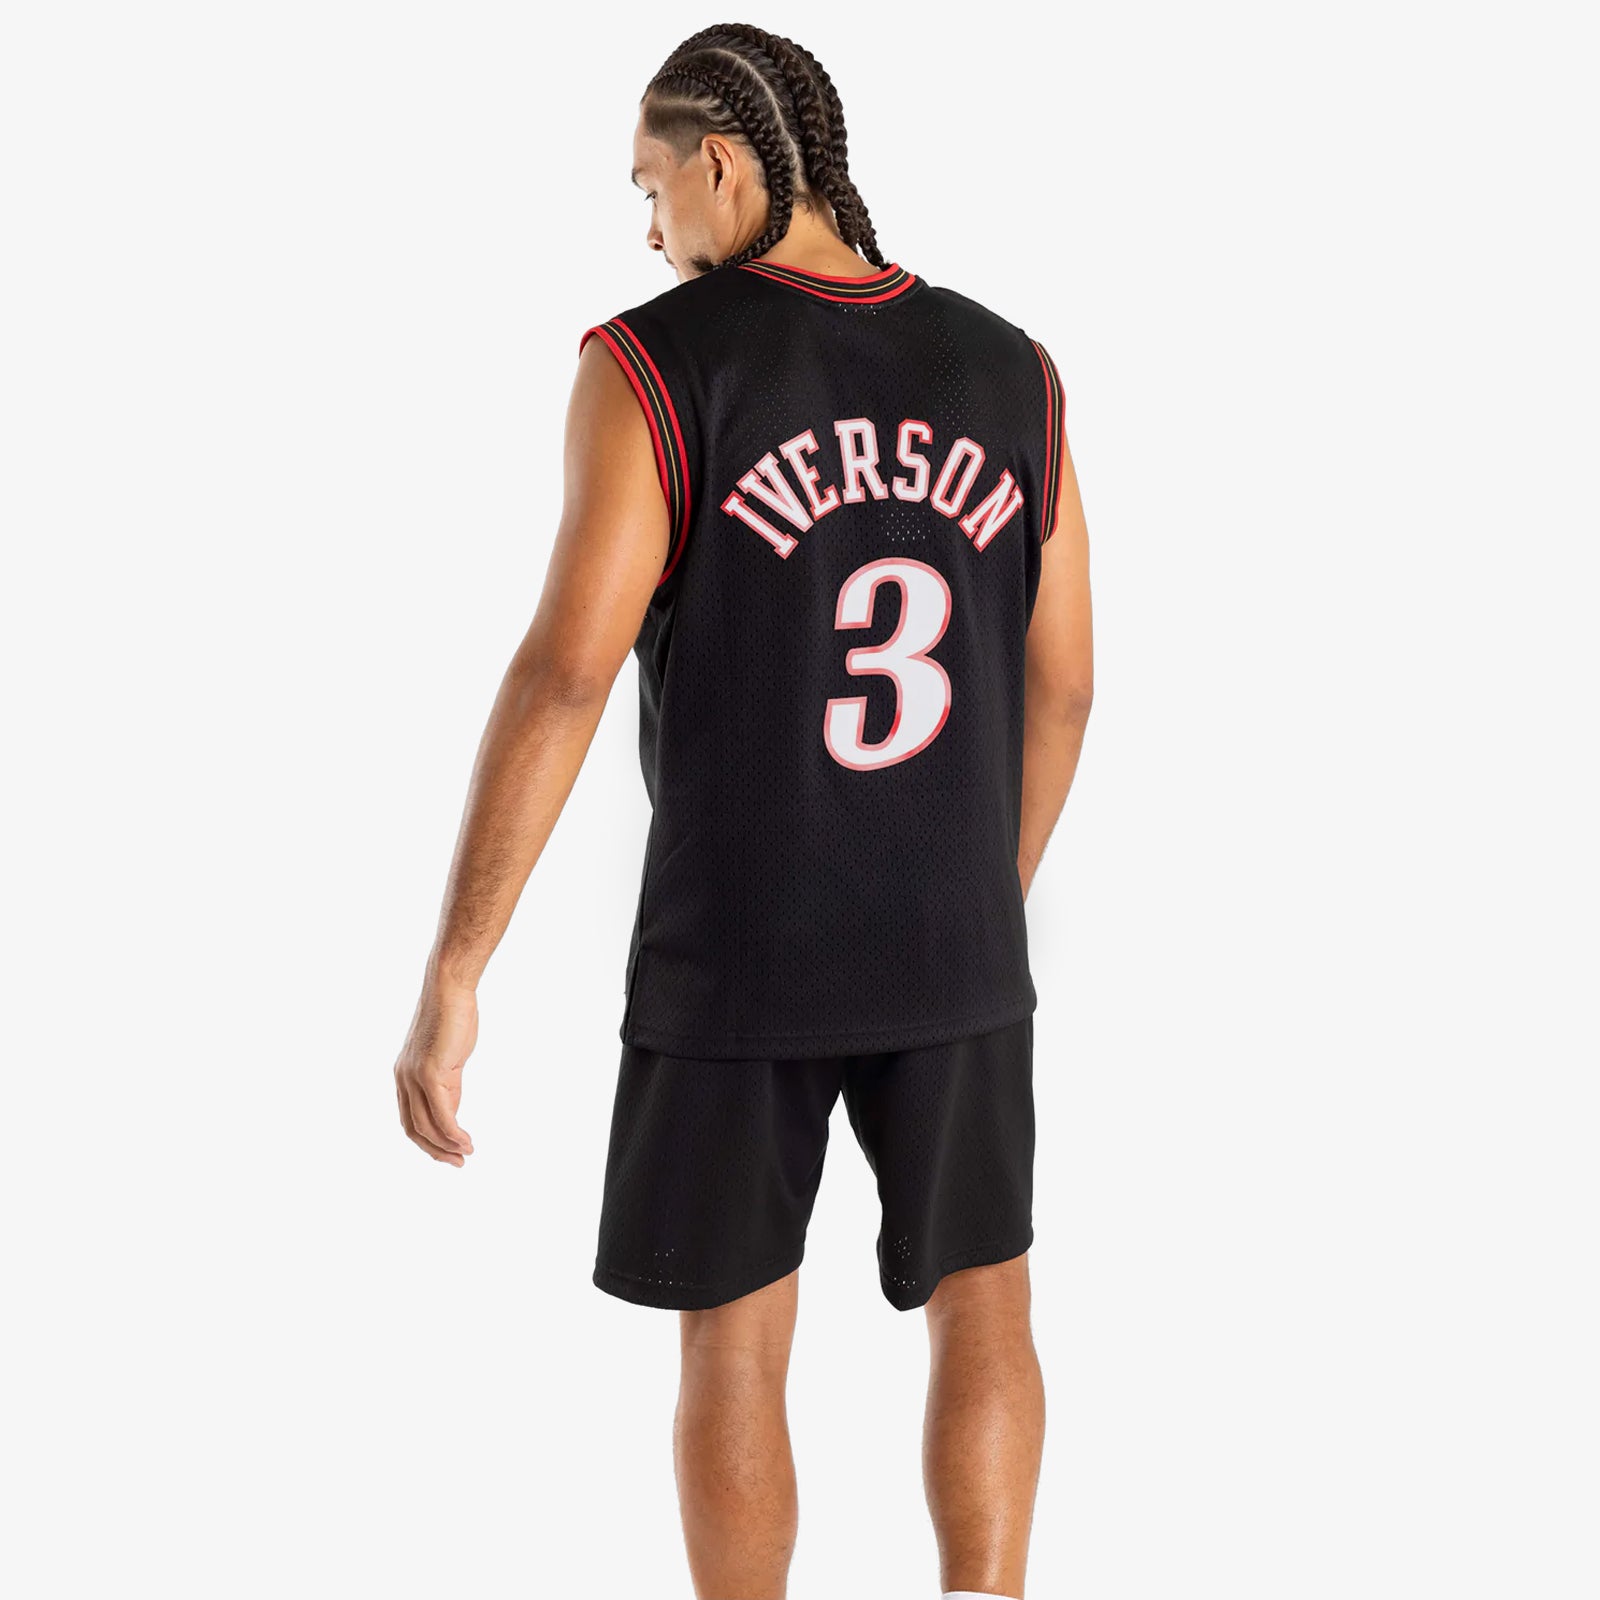 Philadelphia 76ers may bring back the black jerseys Allen Iverson